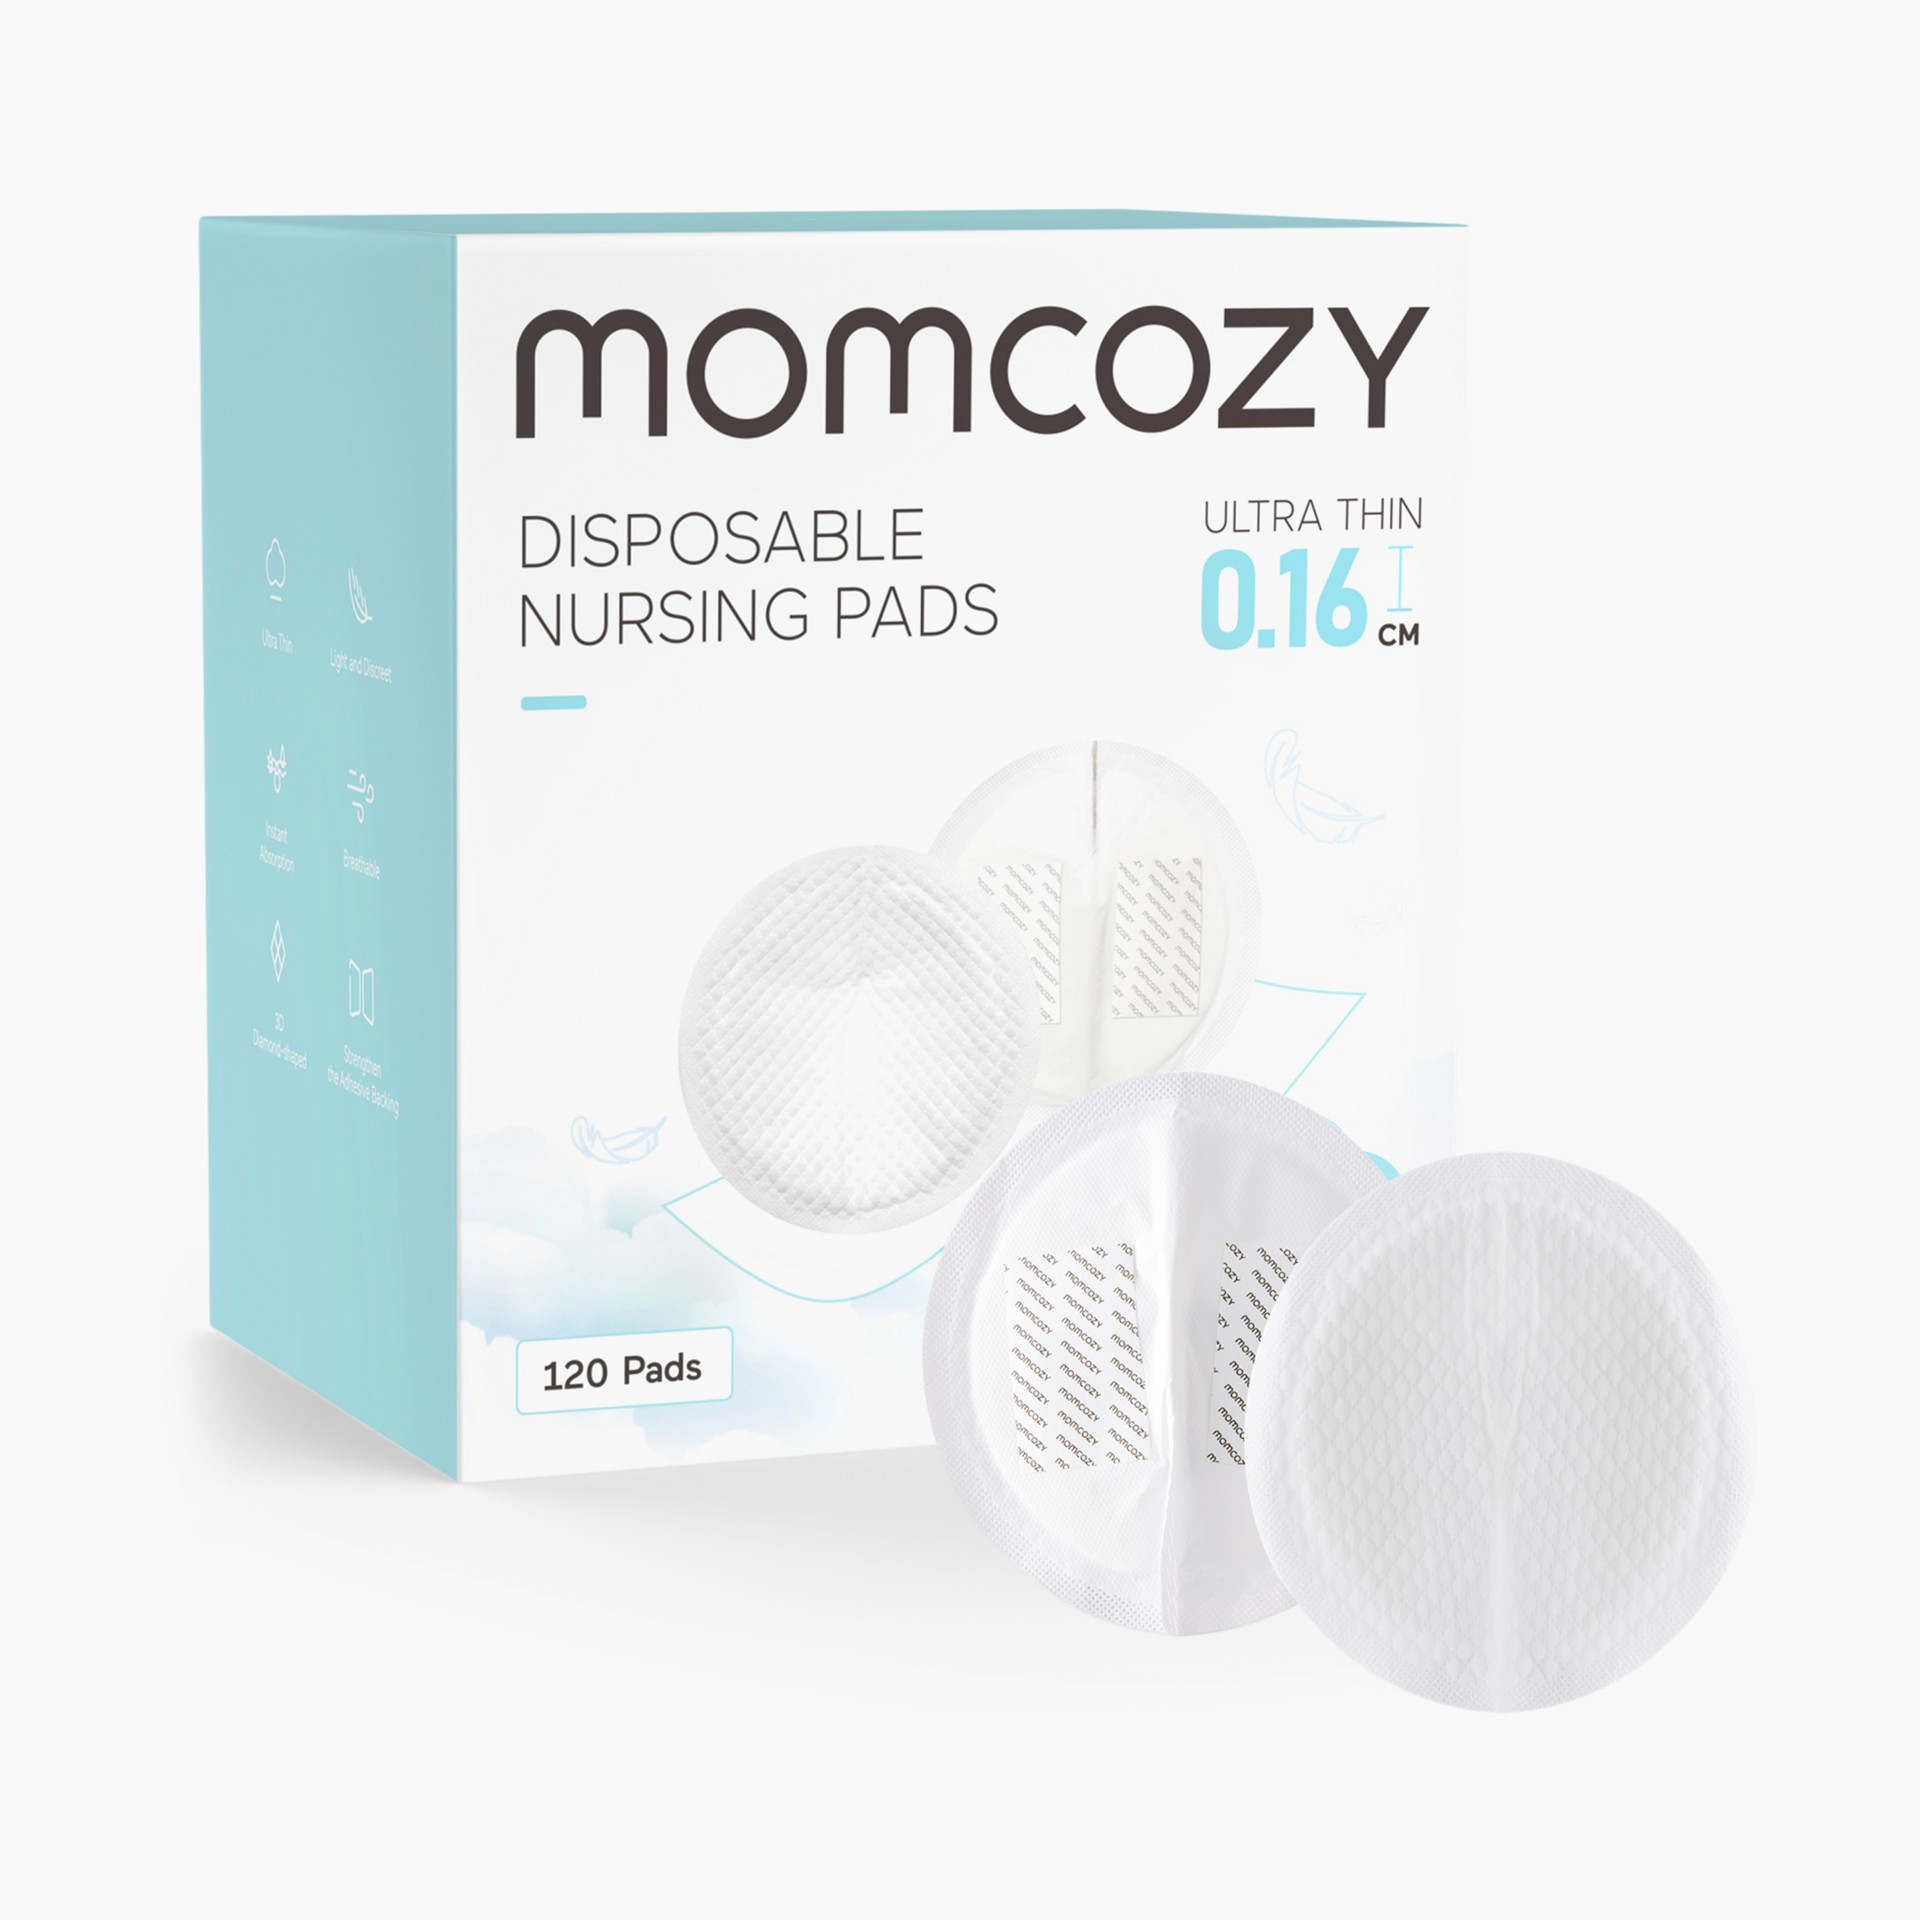 Tissue-Massaging Lactation Devices : momcozy